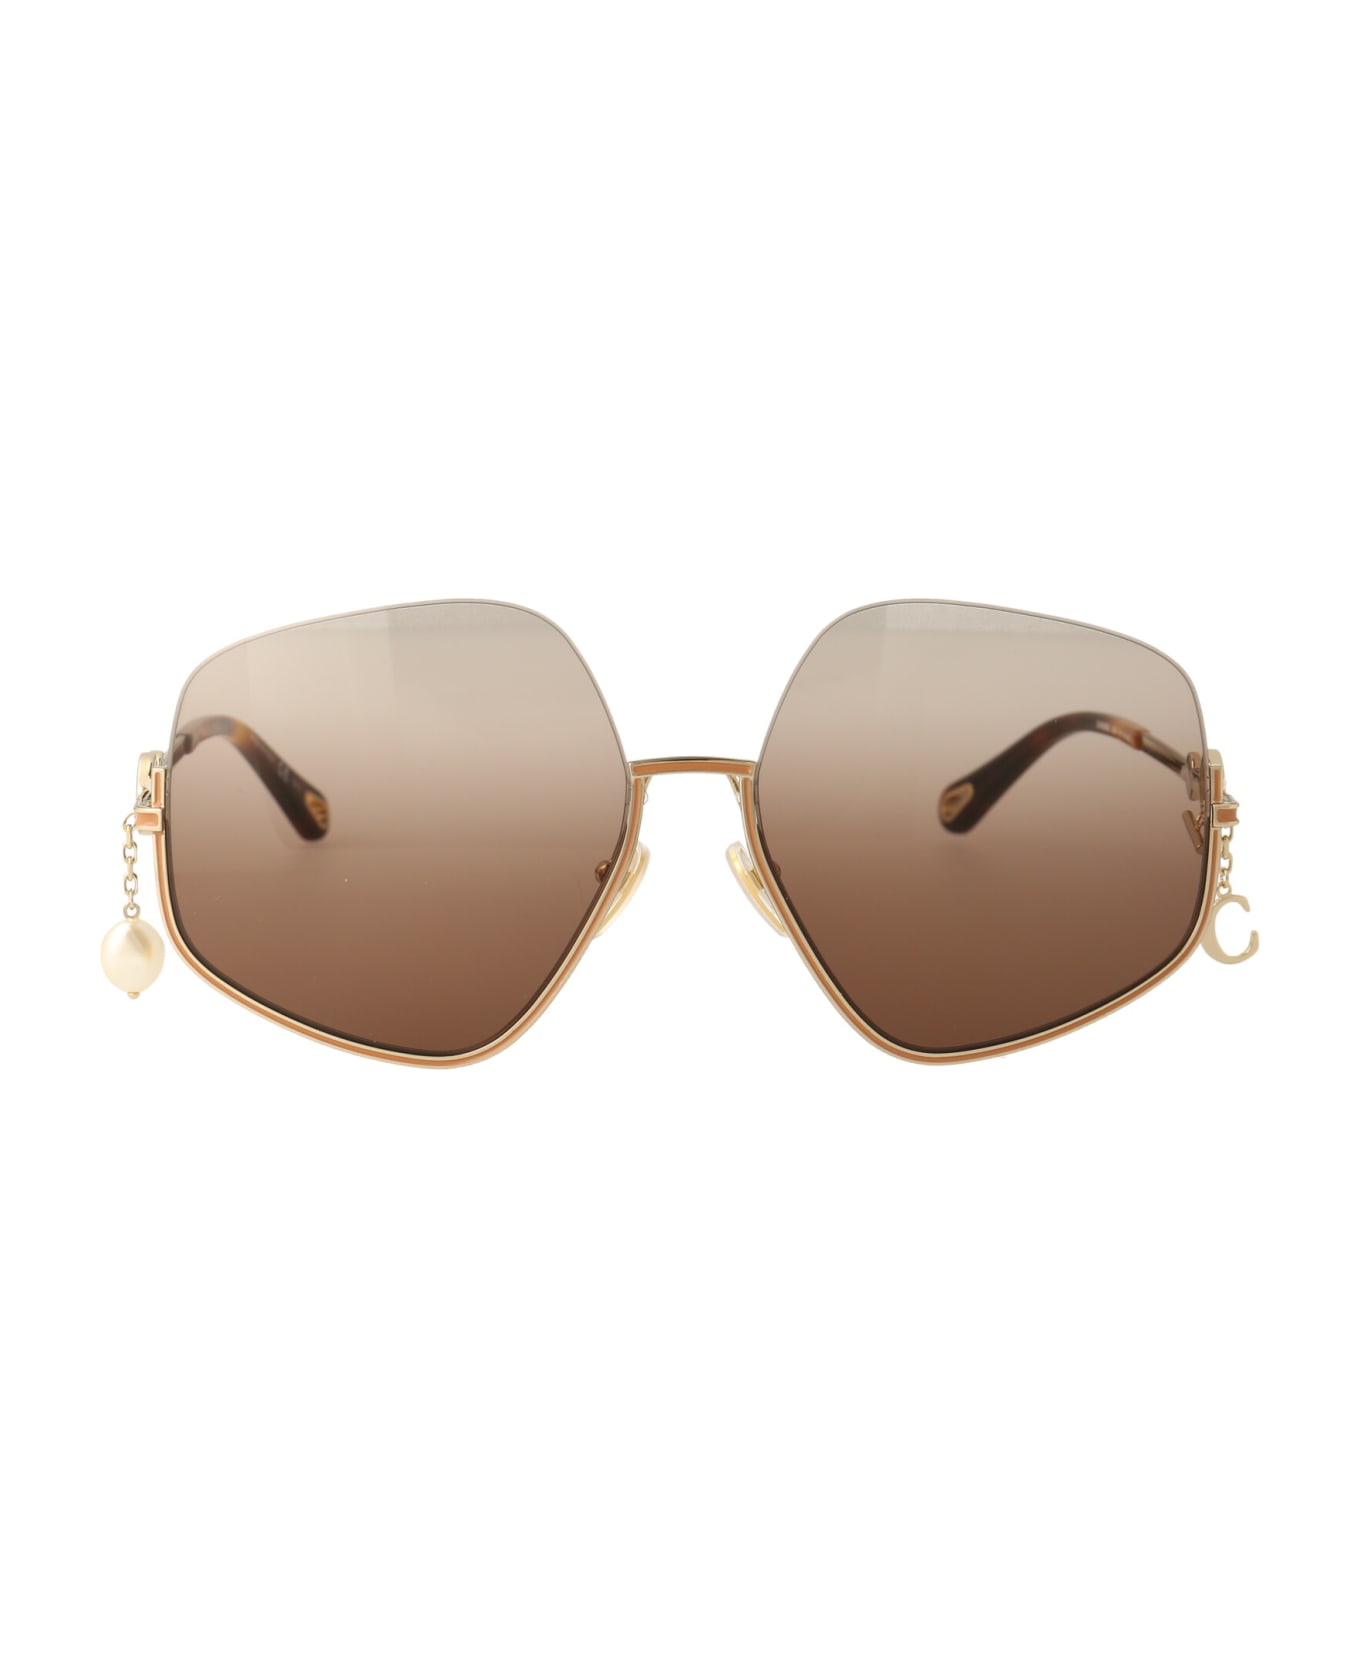 Chloé Eyewear Ch0068s Sunglasses - 003 GOLD GOLD BROWN サングラス